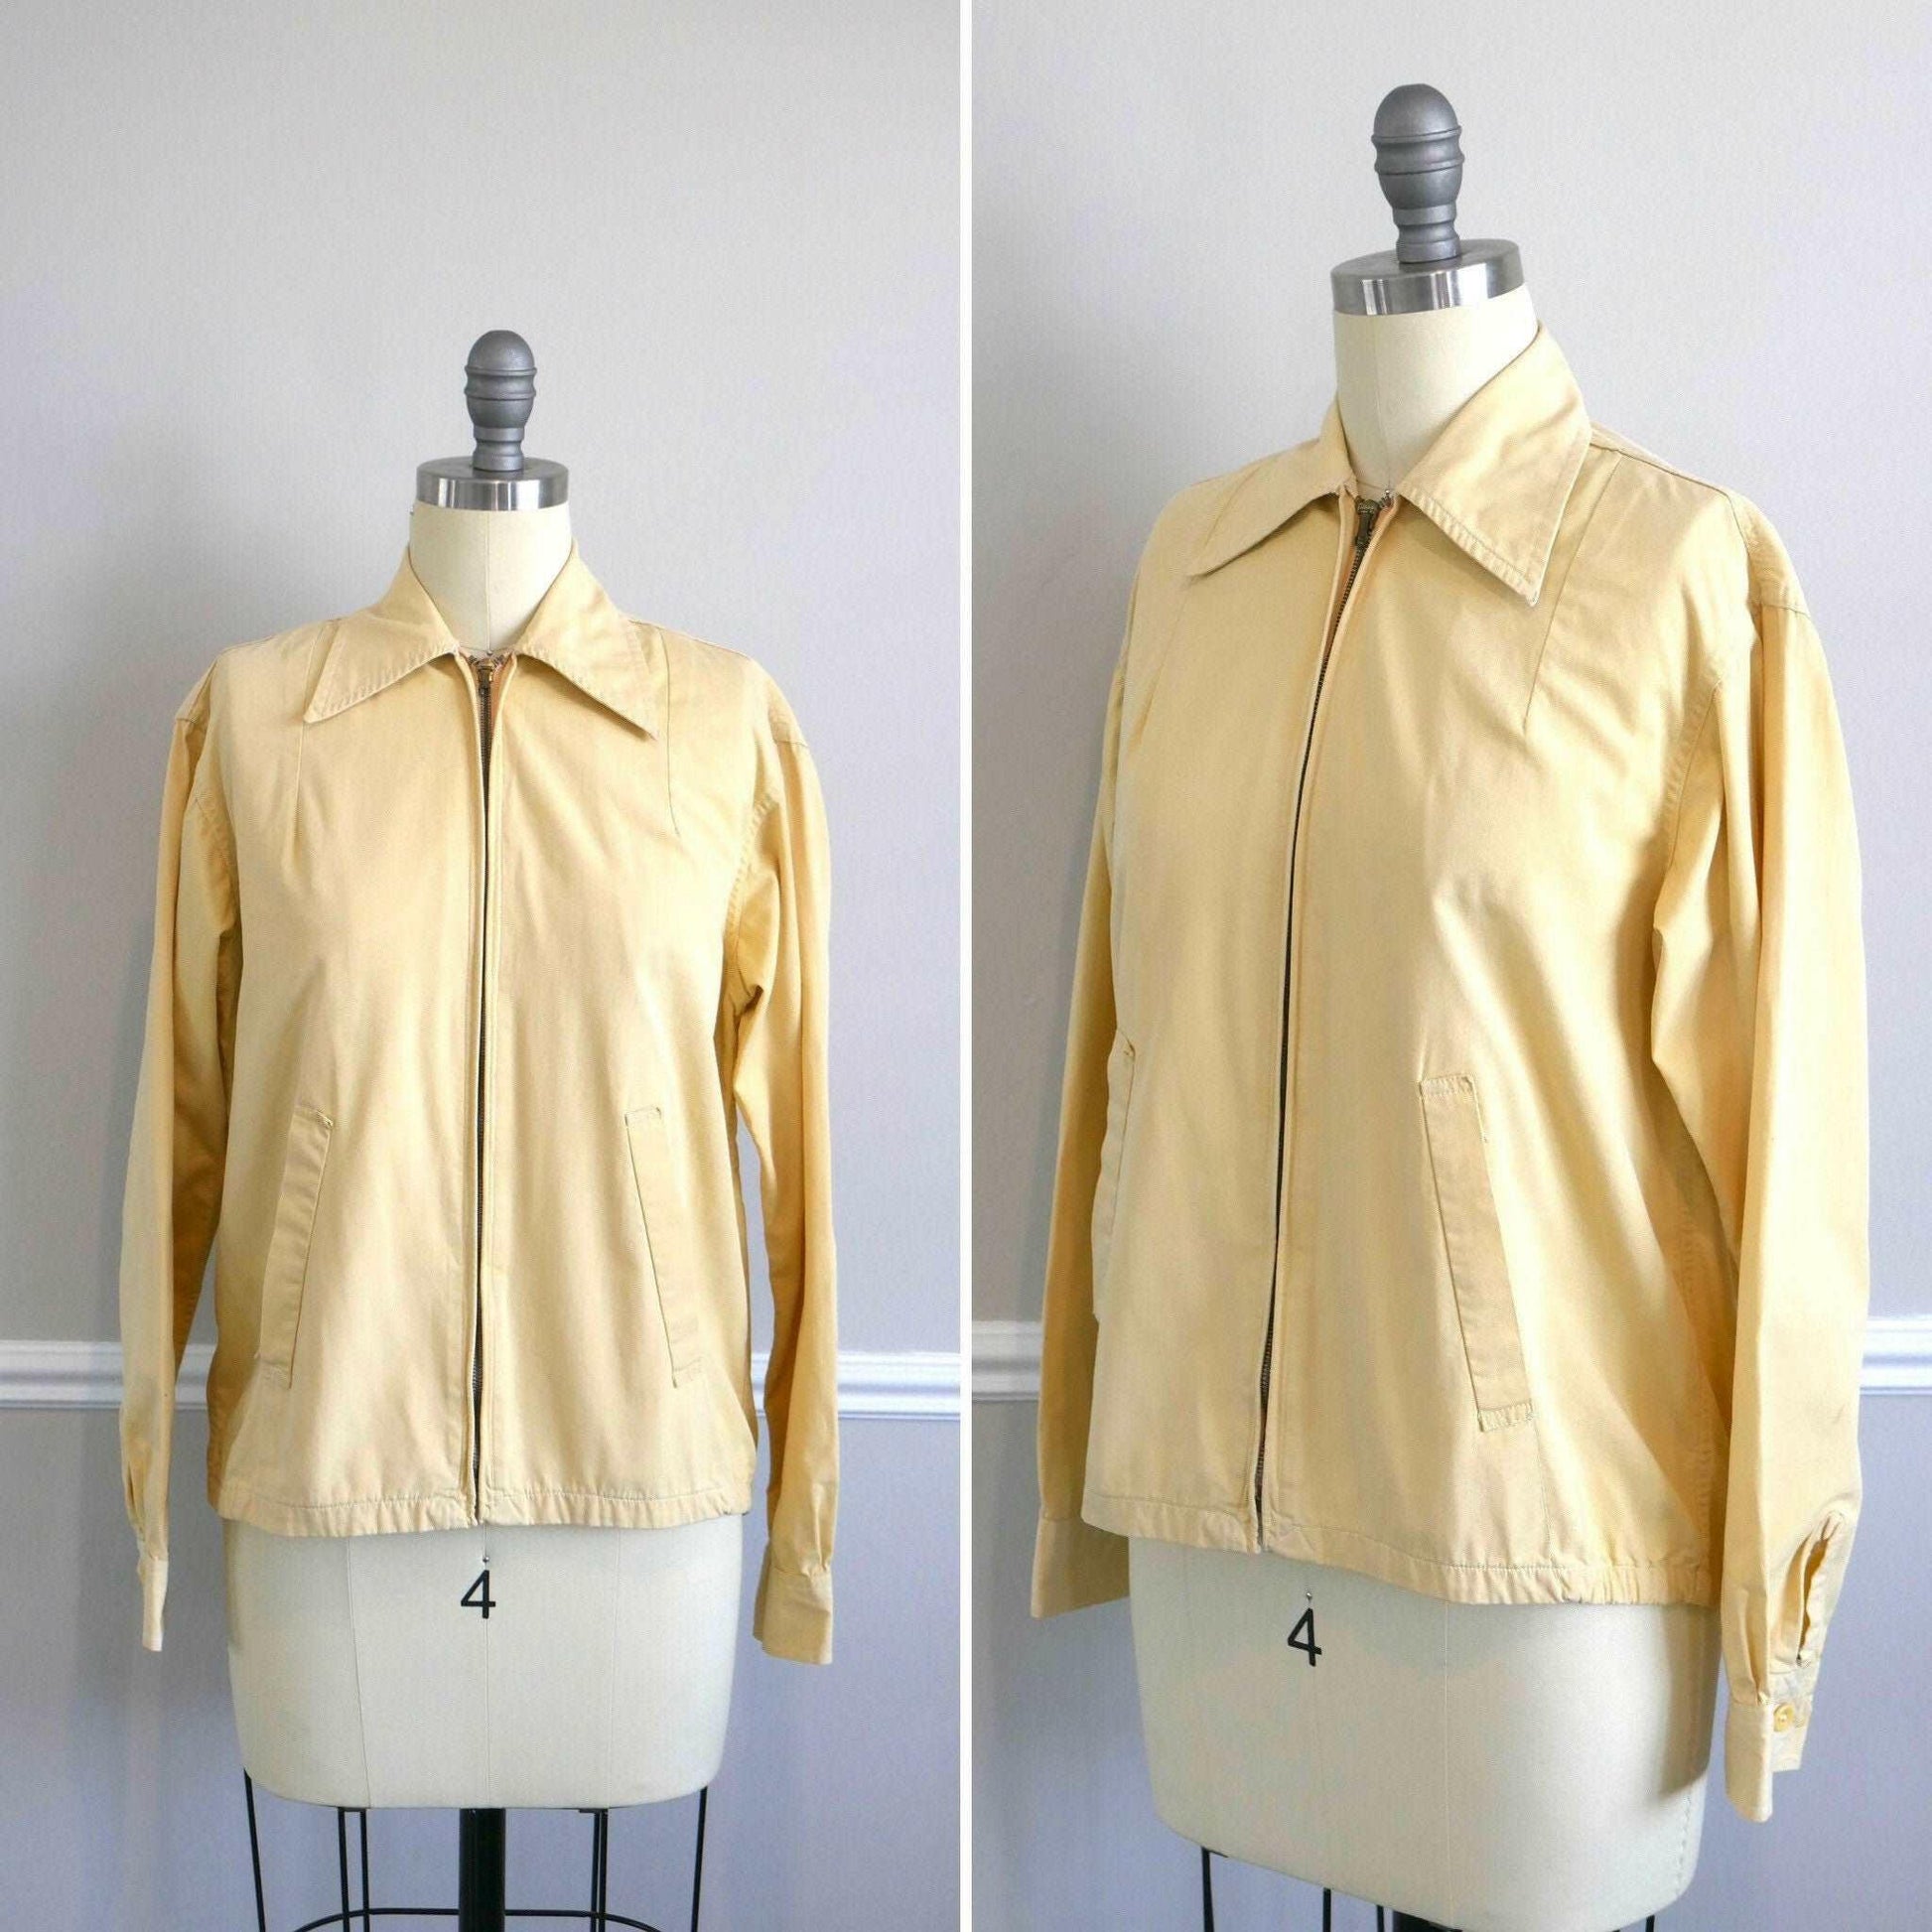 ON SALE Vintage 1930s Yellow Jacket / 40s retro coat dagger collar sportswear RARE size S M L